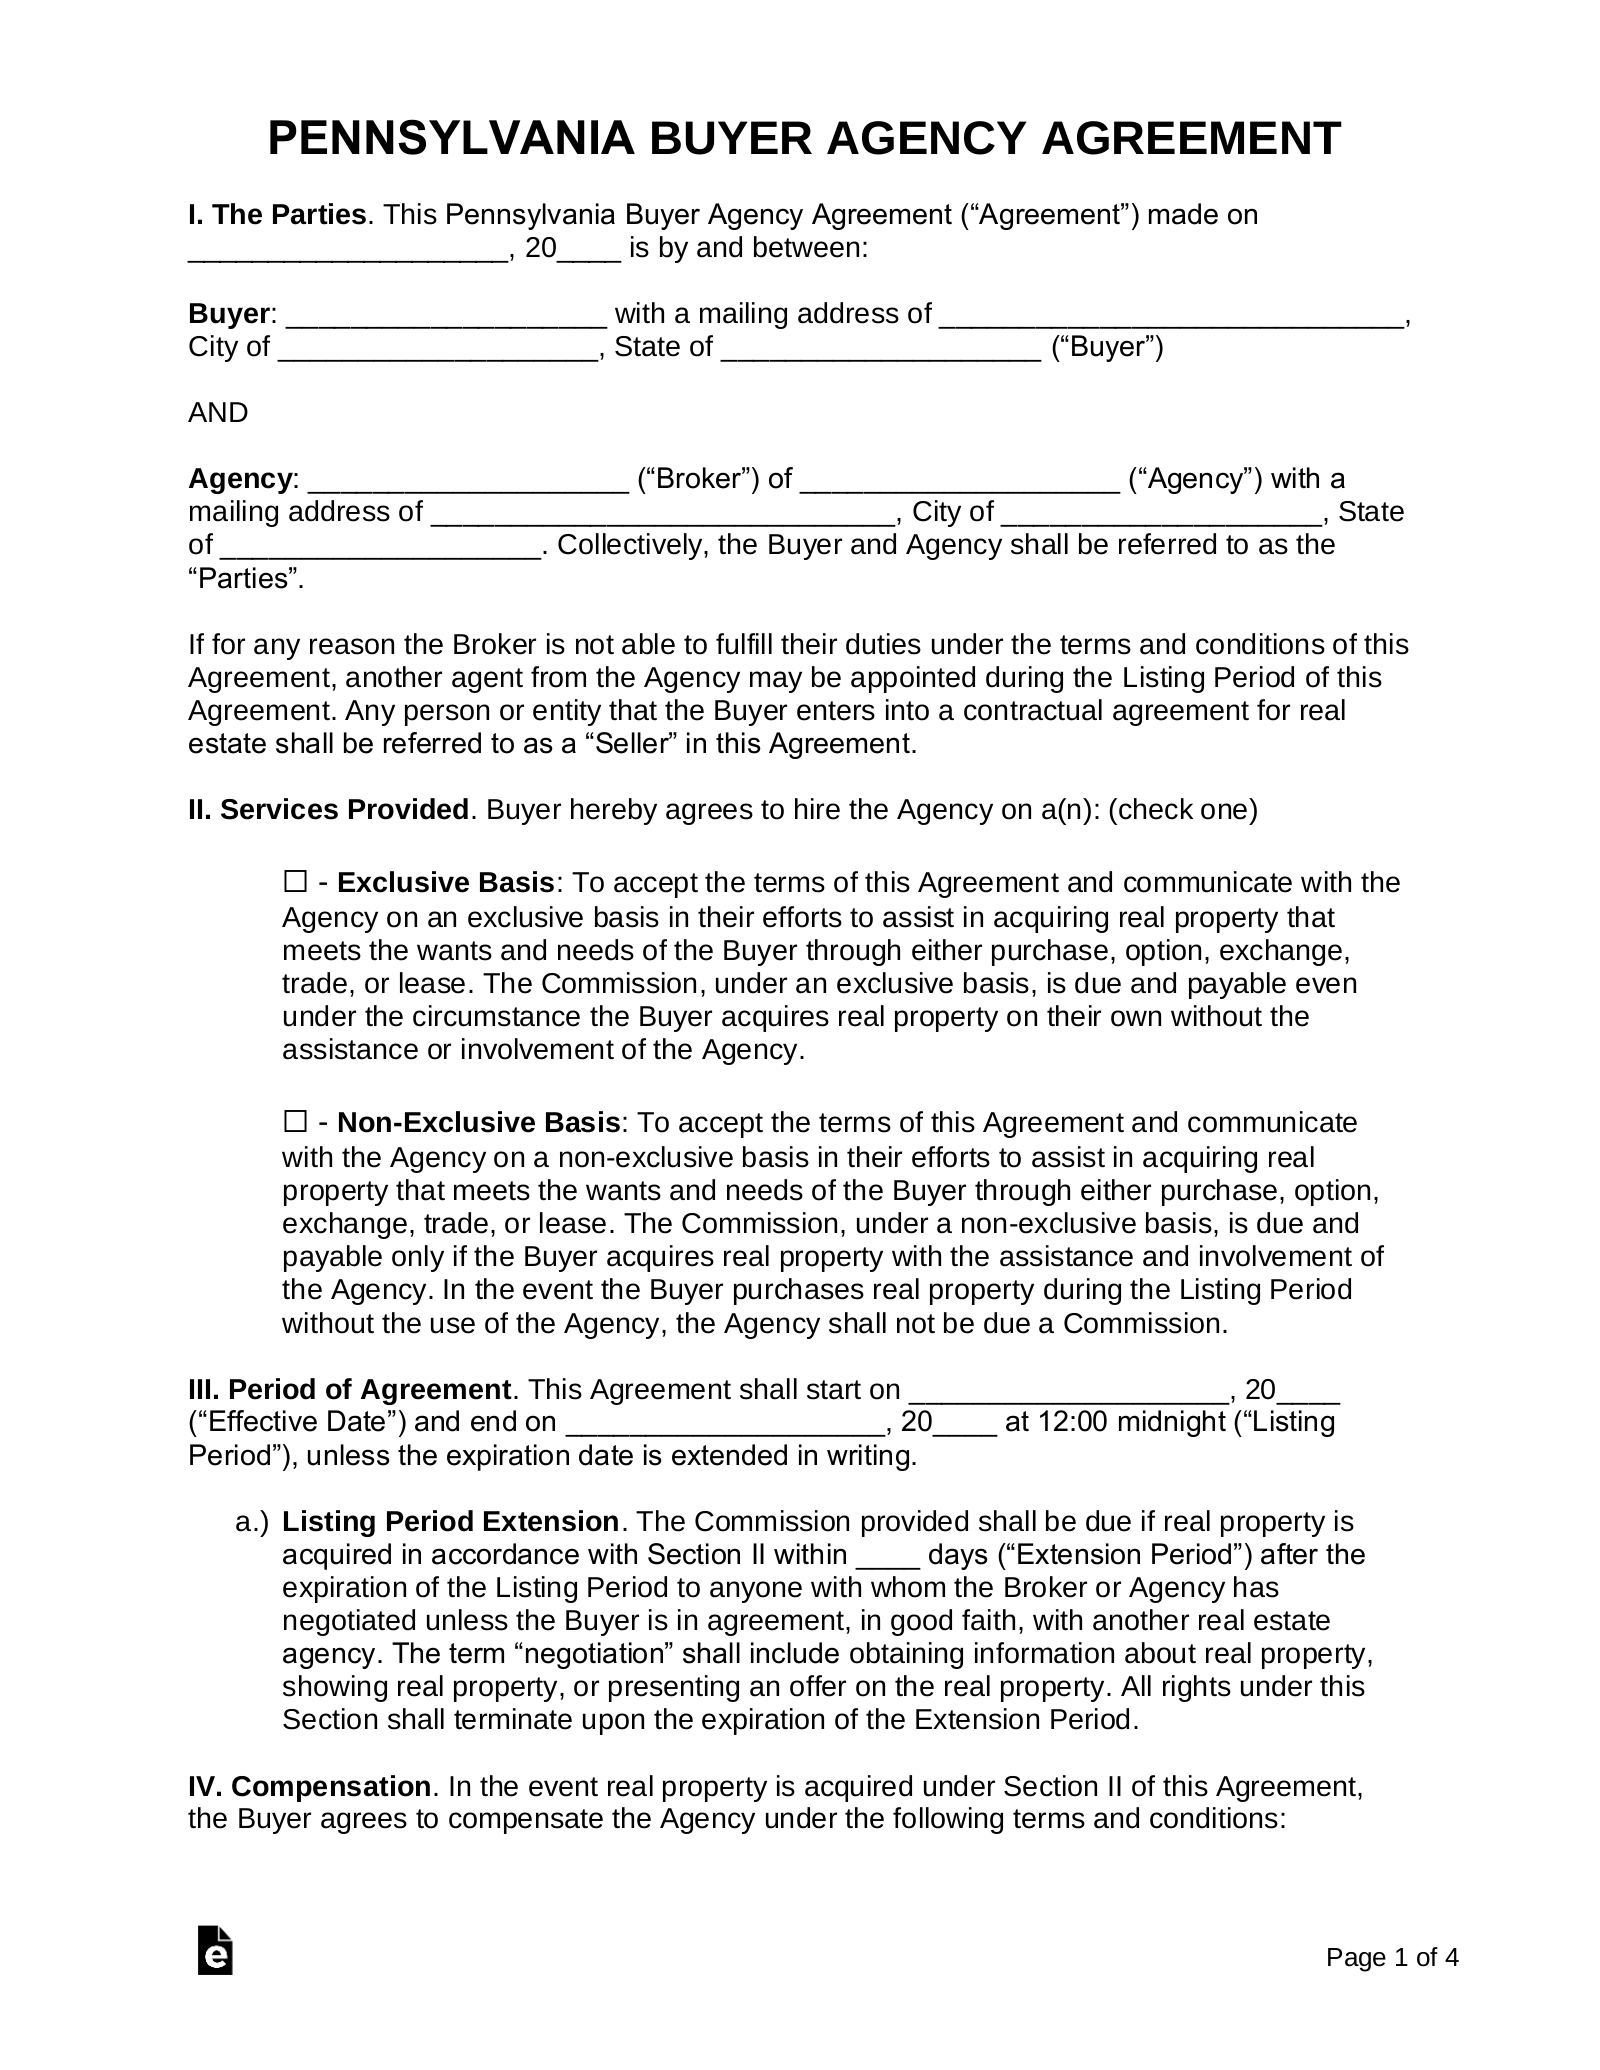 Pennsylvania Buyer Agency Agreement